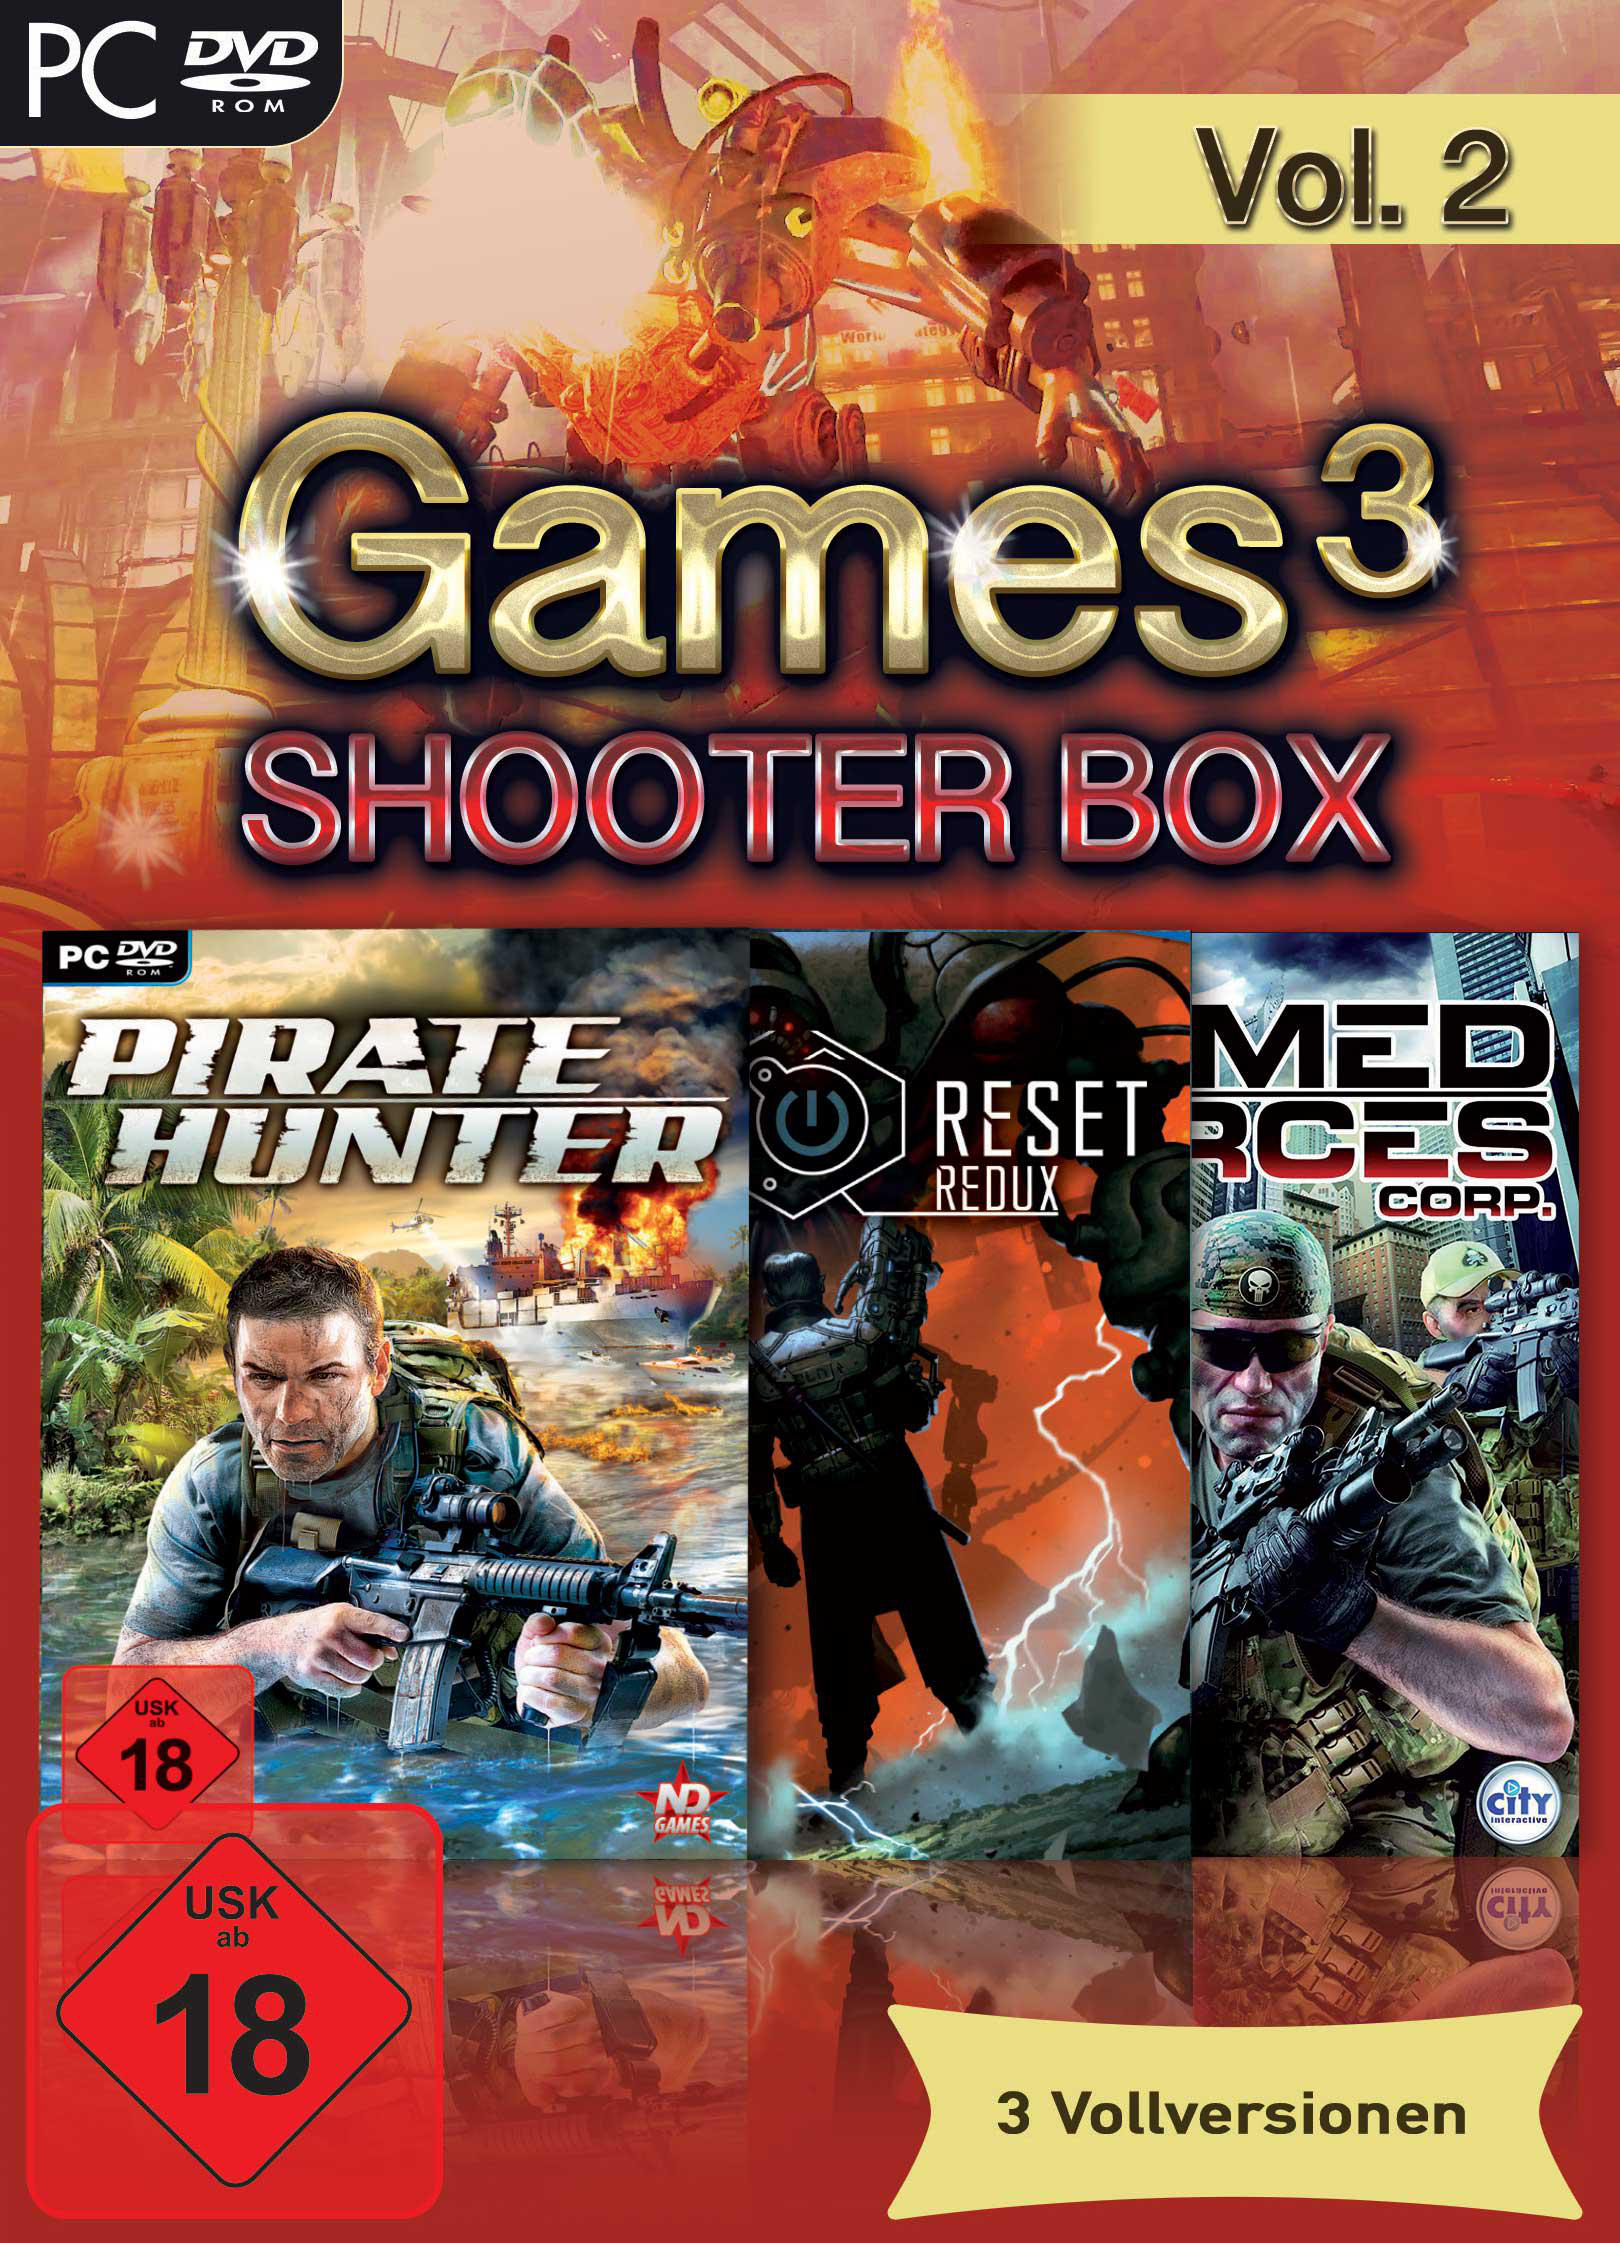 SHOOTER BOX [PC] GAMES3 -